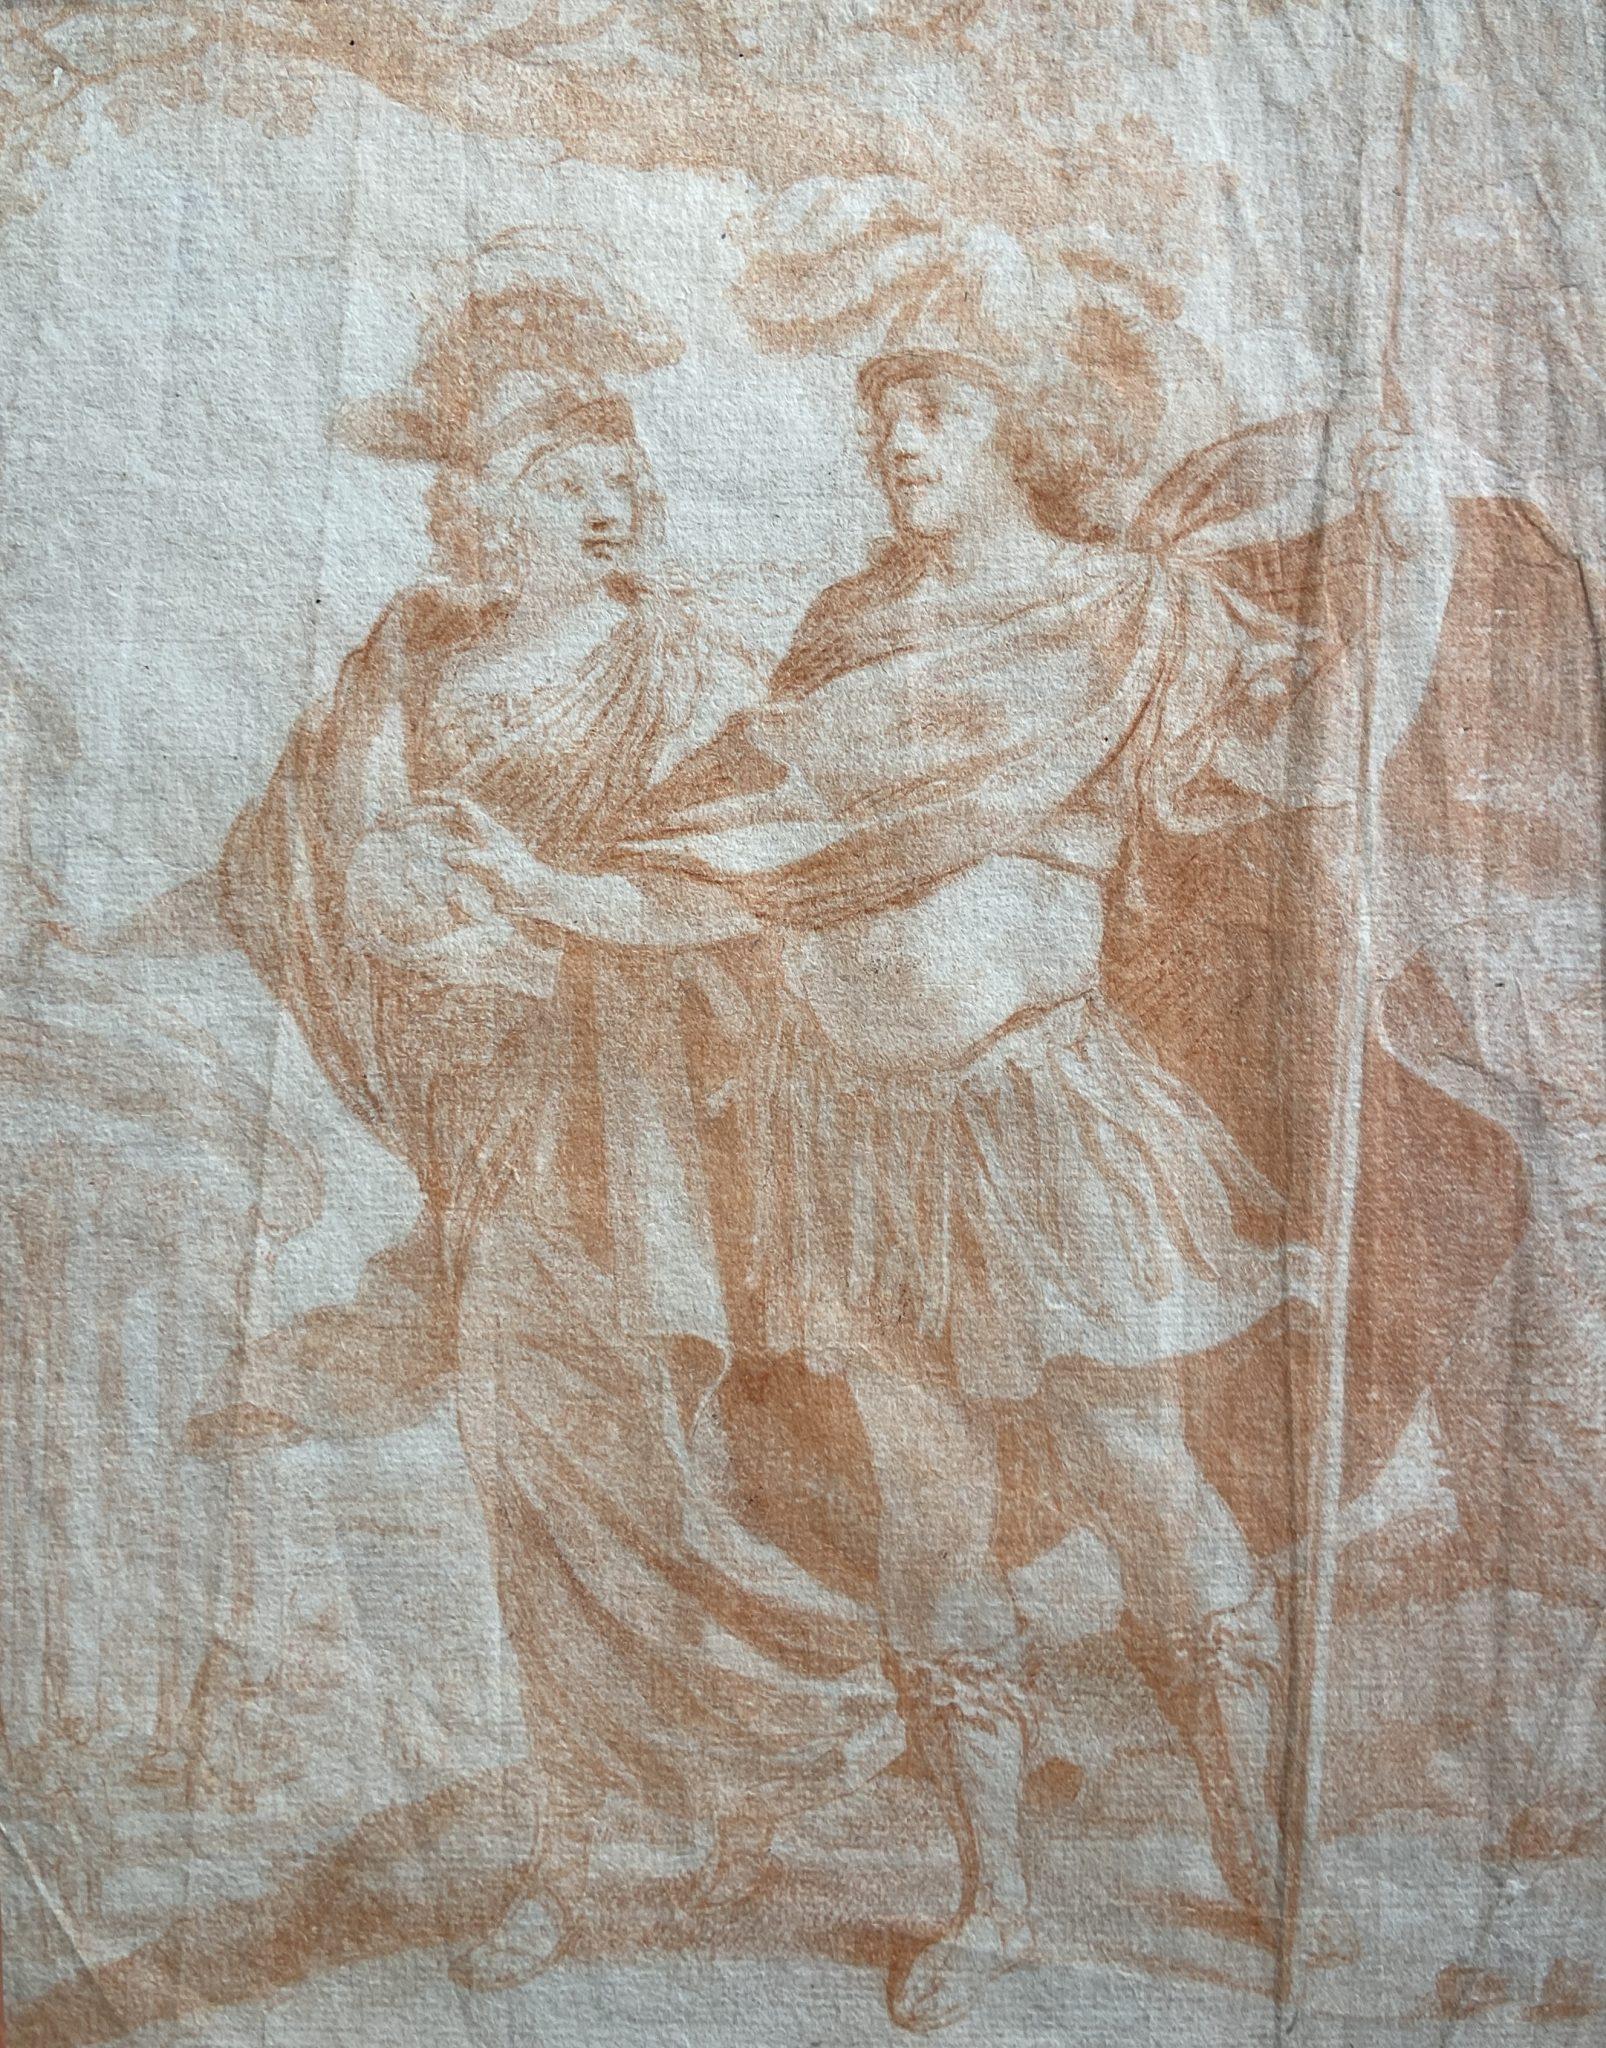 Figurative Art 18th Century Italian School - The Allegory of Minerva, dessin à la craie sanguine, XVIIIe siècle italien